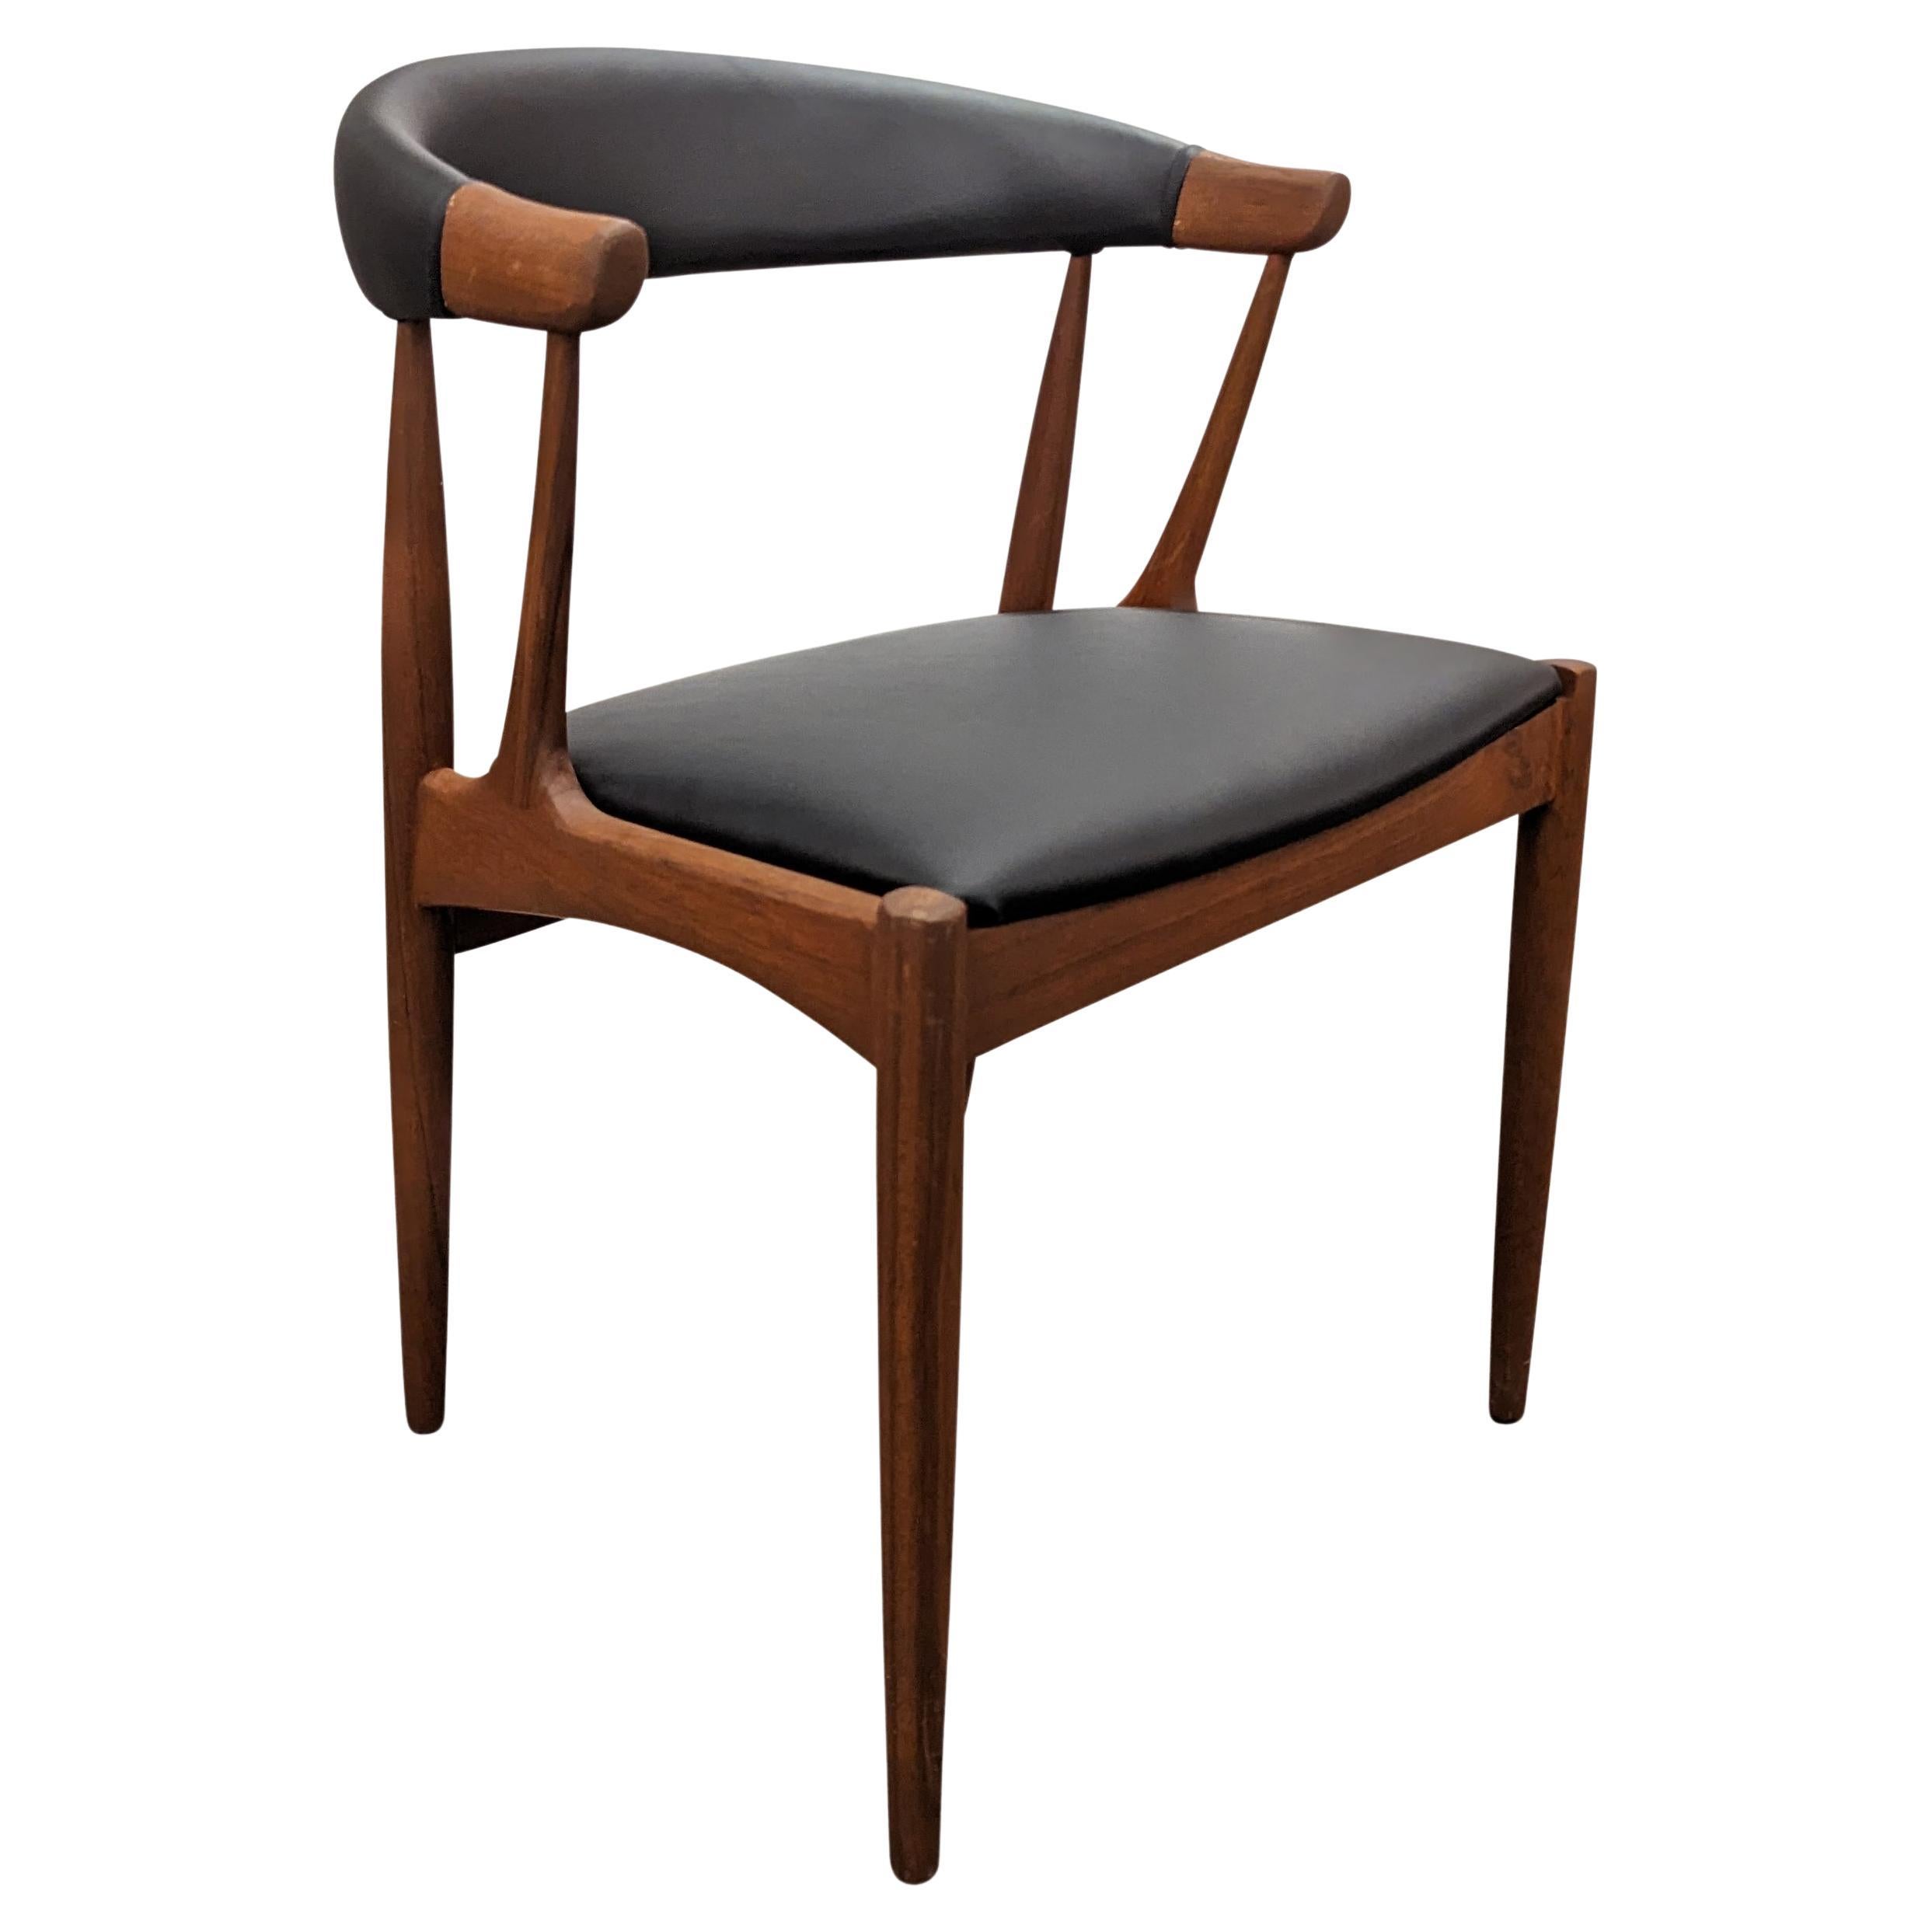 Vintage Danish Mid Century Johannes Andersen Arm Chair - 022432 For Sale